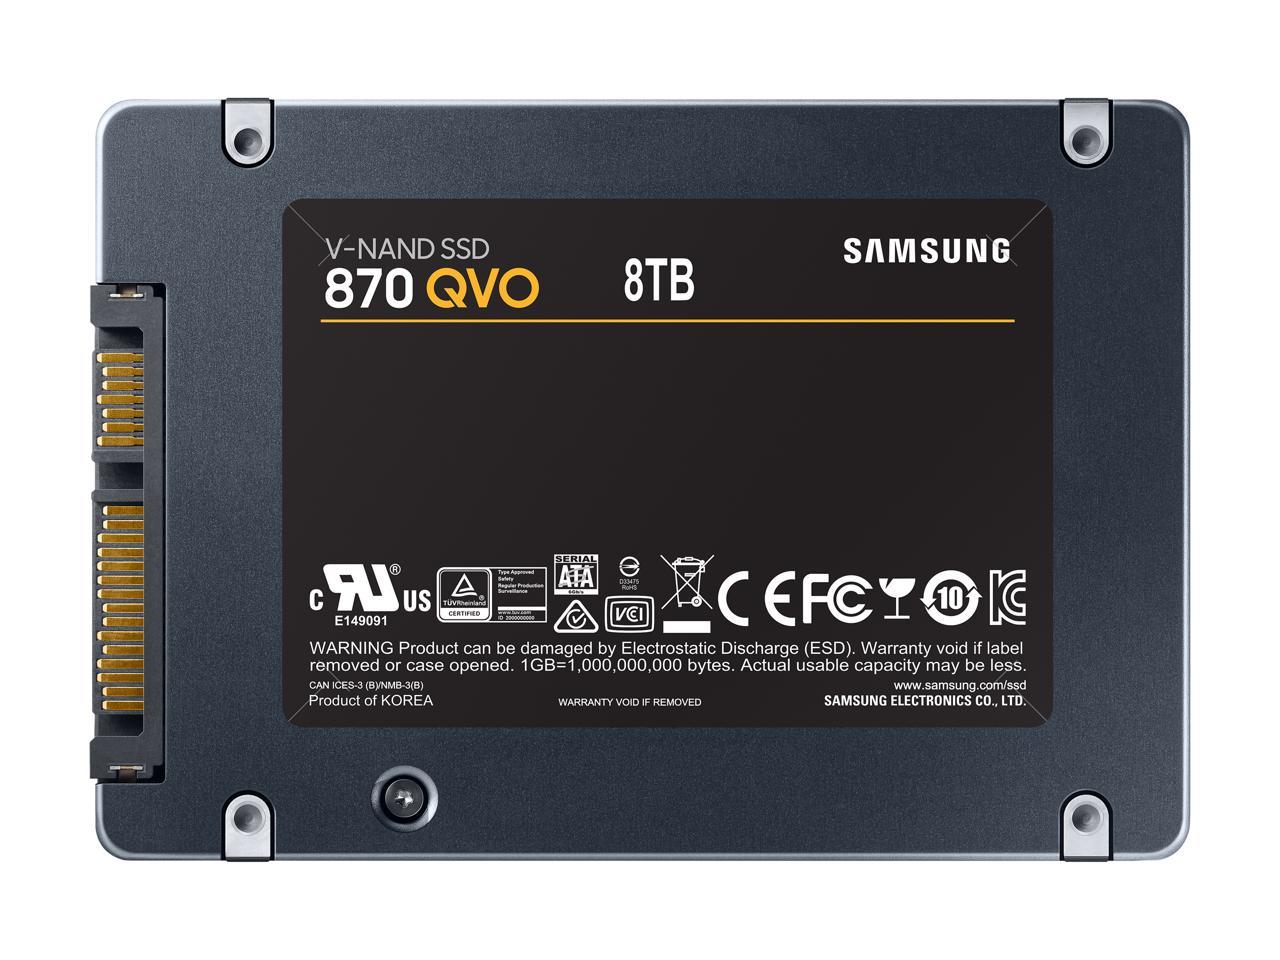 8TB Samsung 870 QVO 2.5" SSD $465 on Newegg